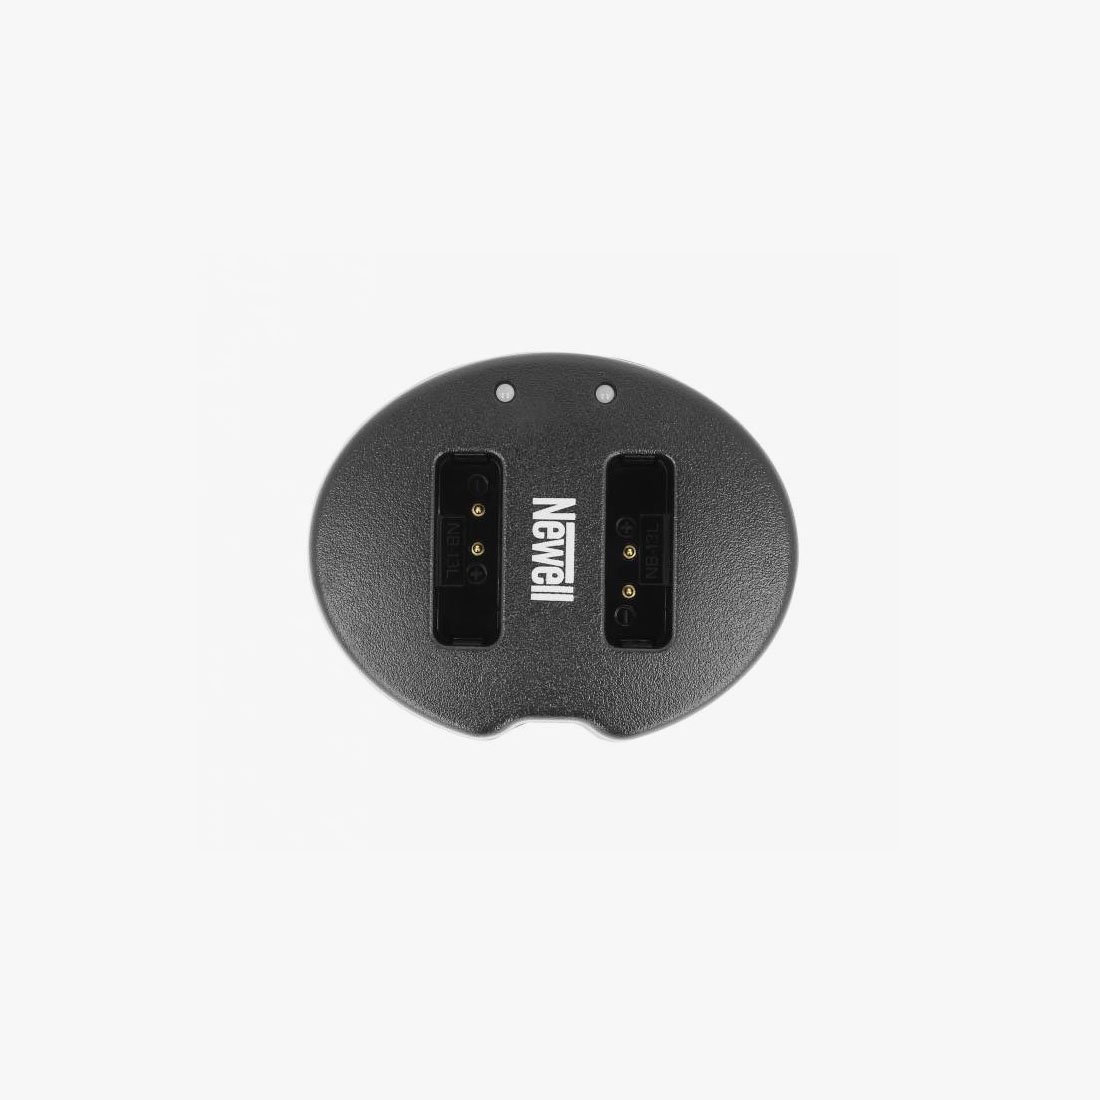 Двойное зарядное устройство Newell dual usb charger для DMW-BLC12 (NL1744)